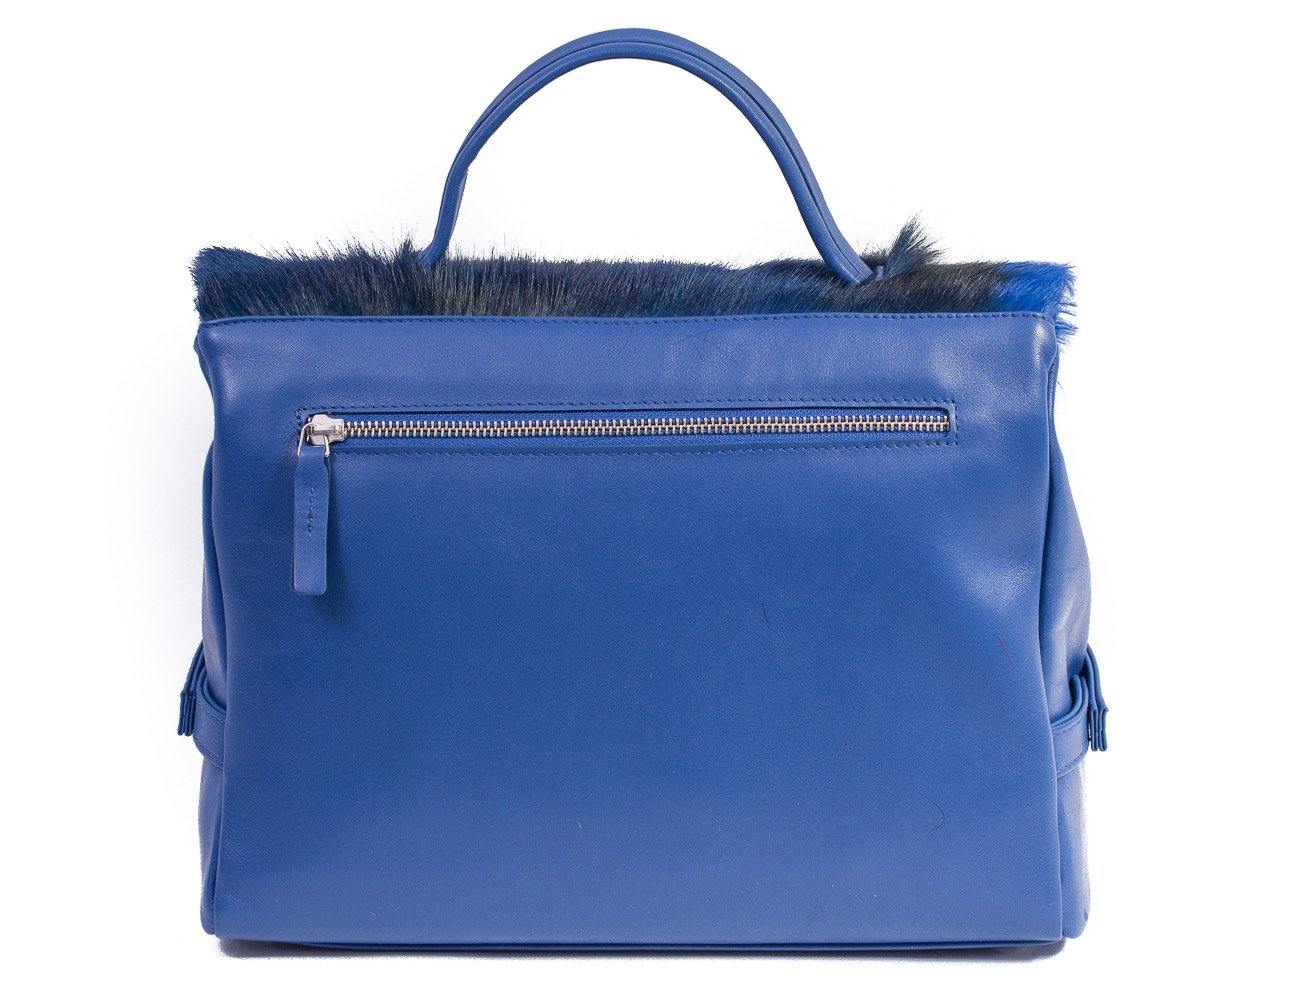 sherene melinda springbok hair-on-hide royal blue leather smith tote bag Stripe back